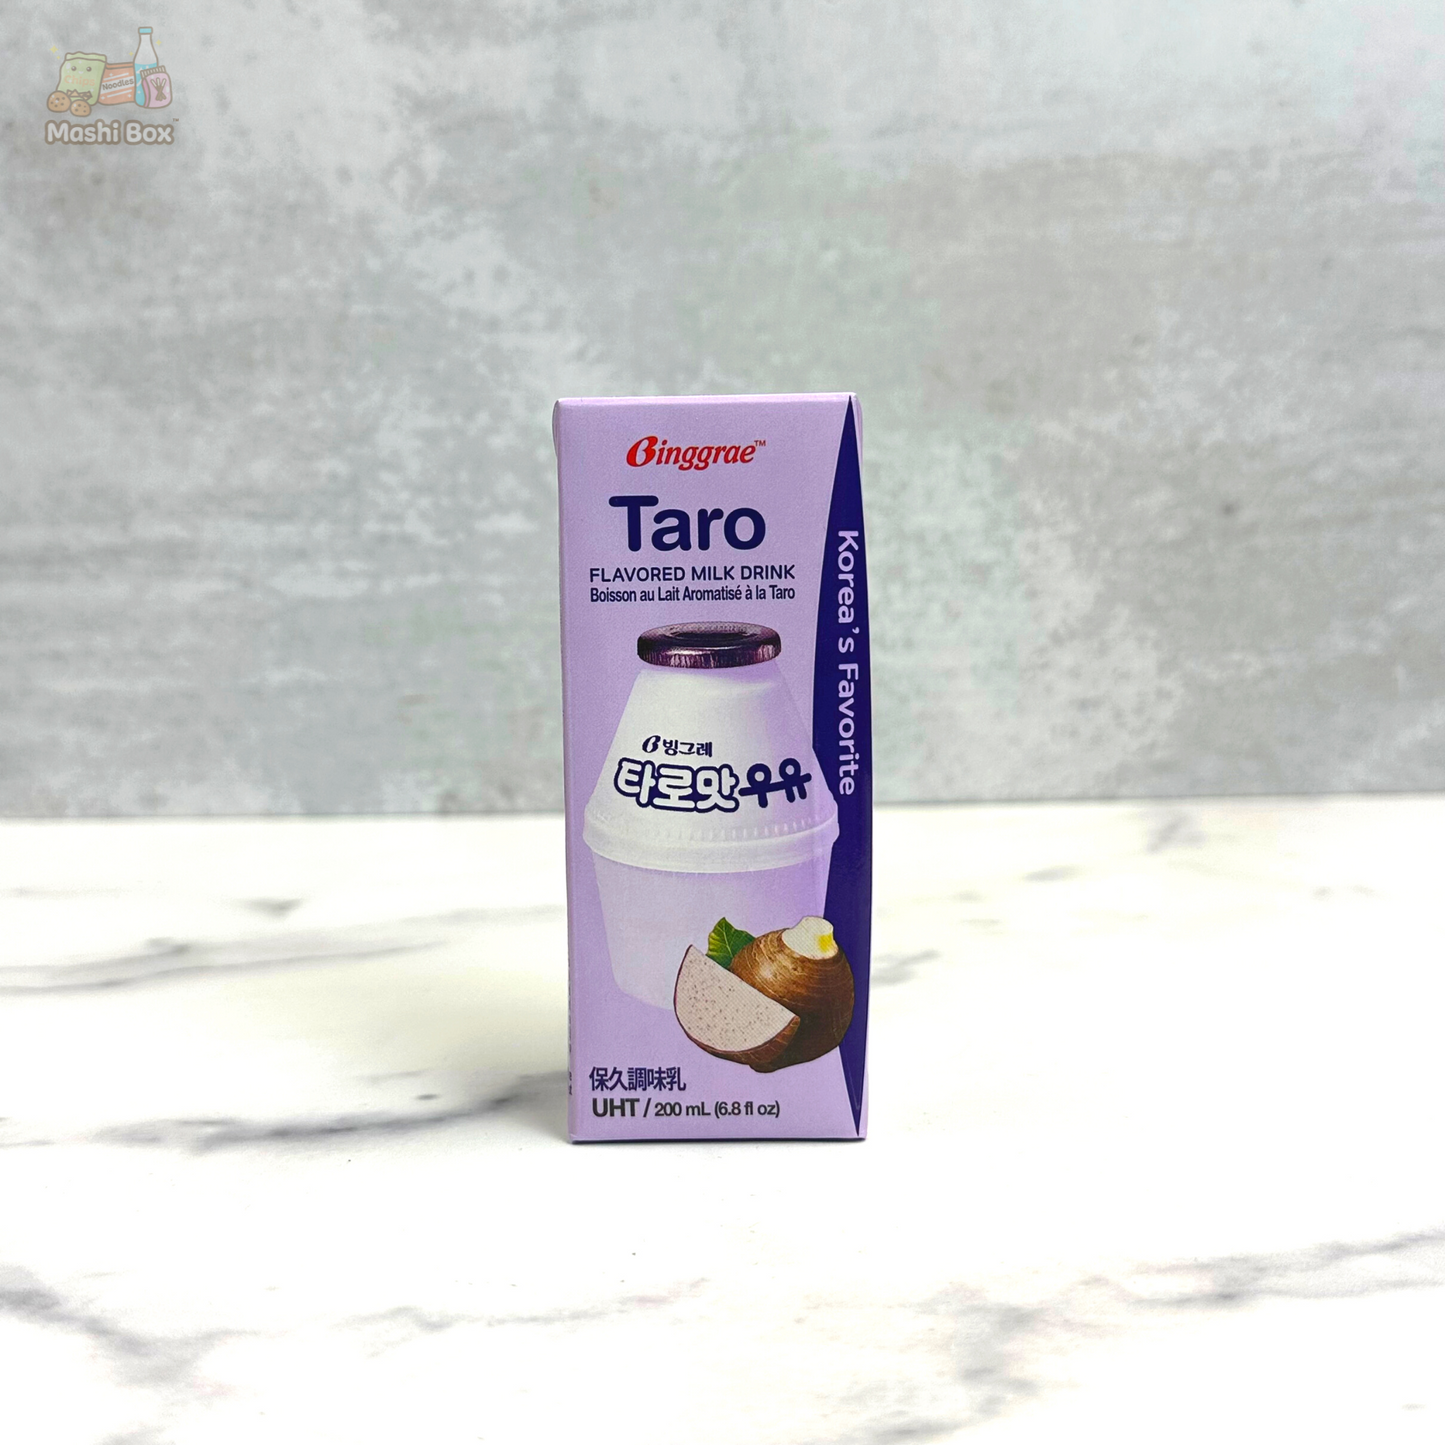 Binggrae Taro Flavored Milk Drink